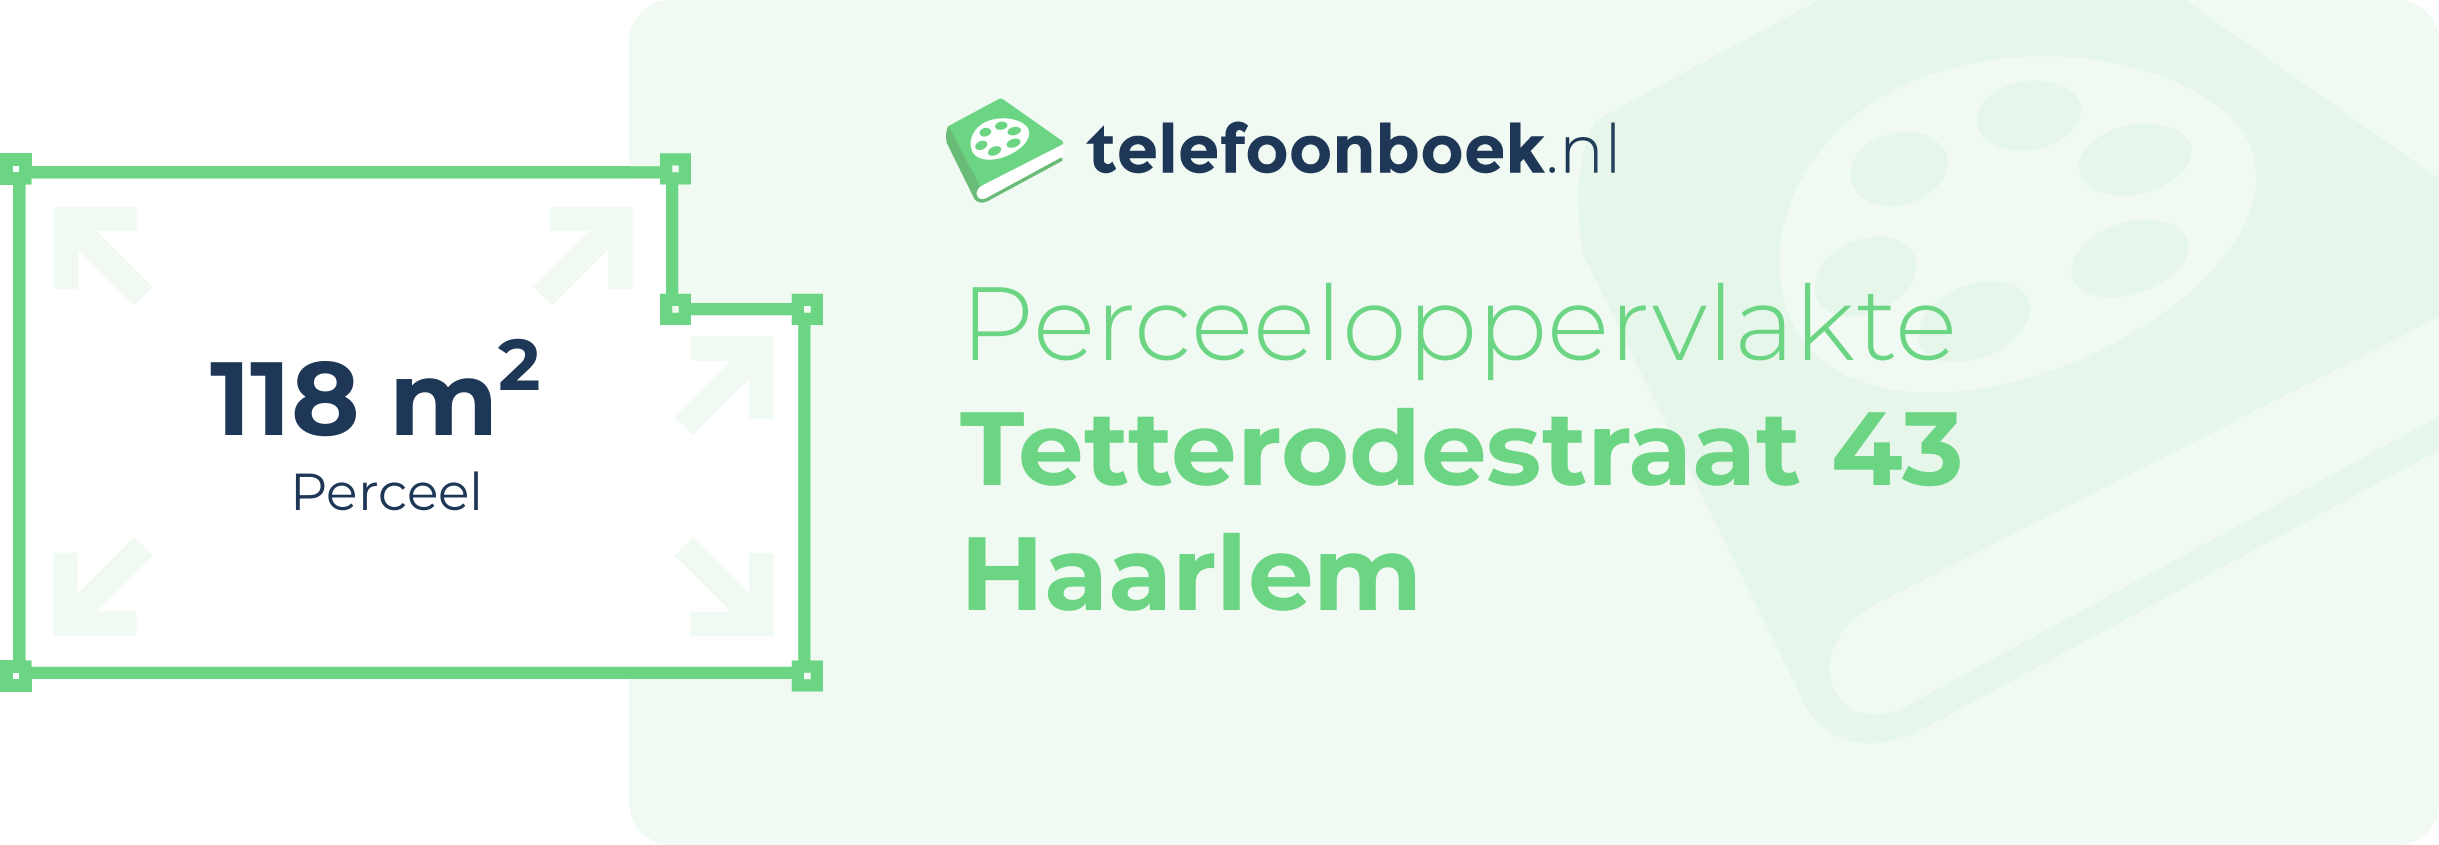 Perceeloppervlakte Tetterodestraat 43 Haarlem